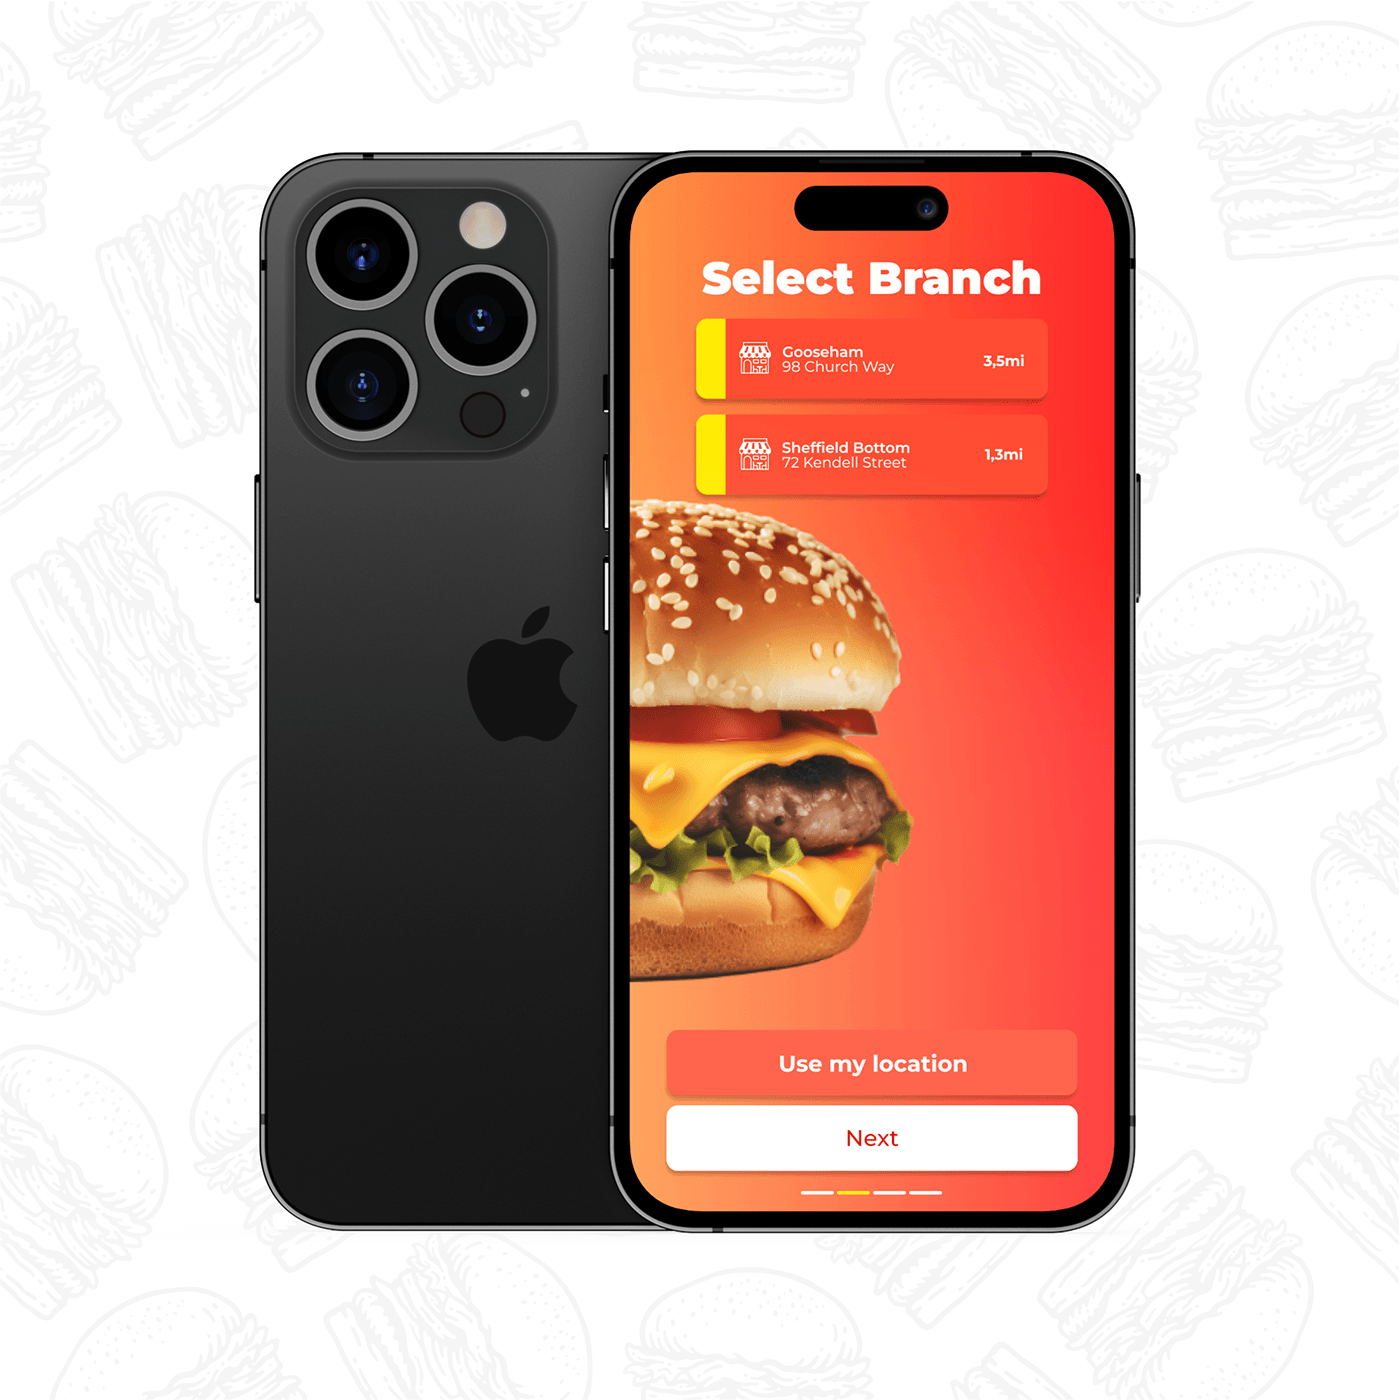 burger AI Design app design Figma Delivery App Design UI/UX Mobile app